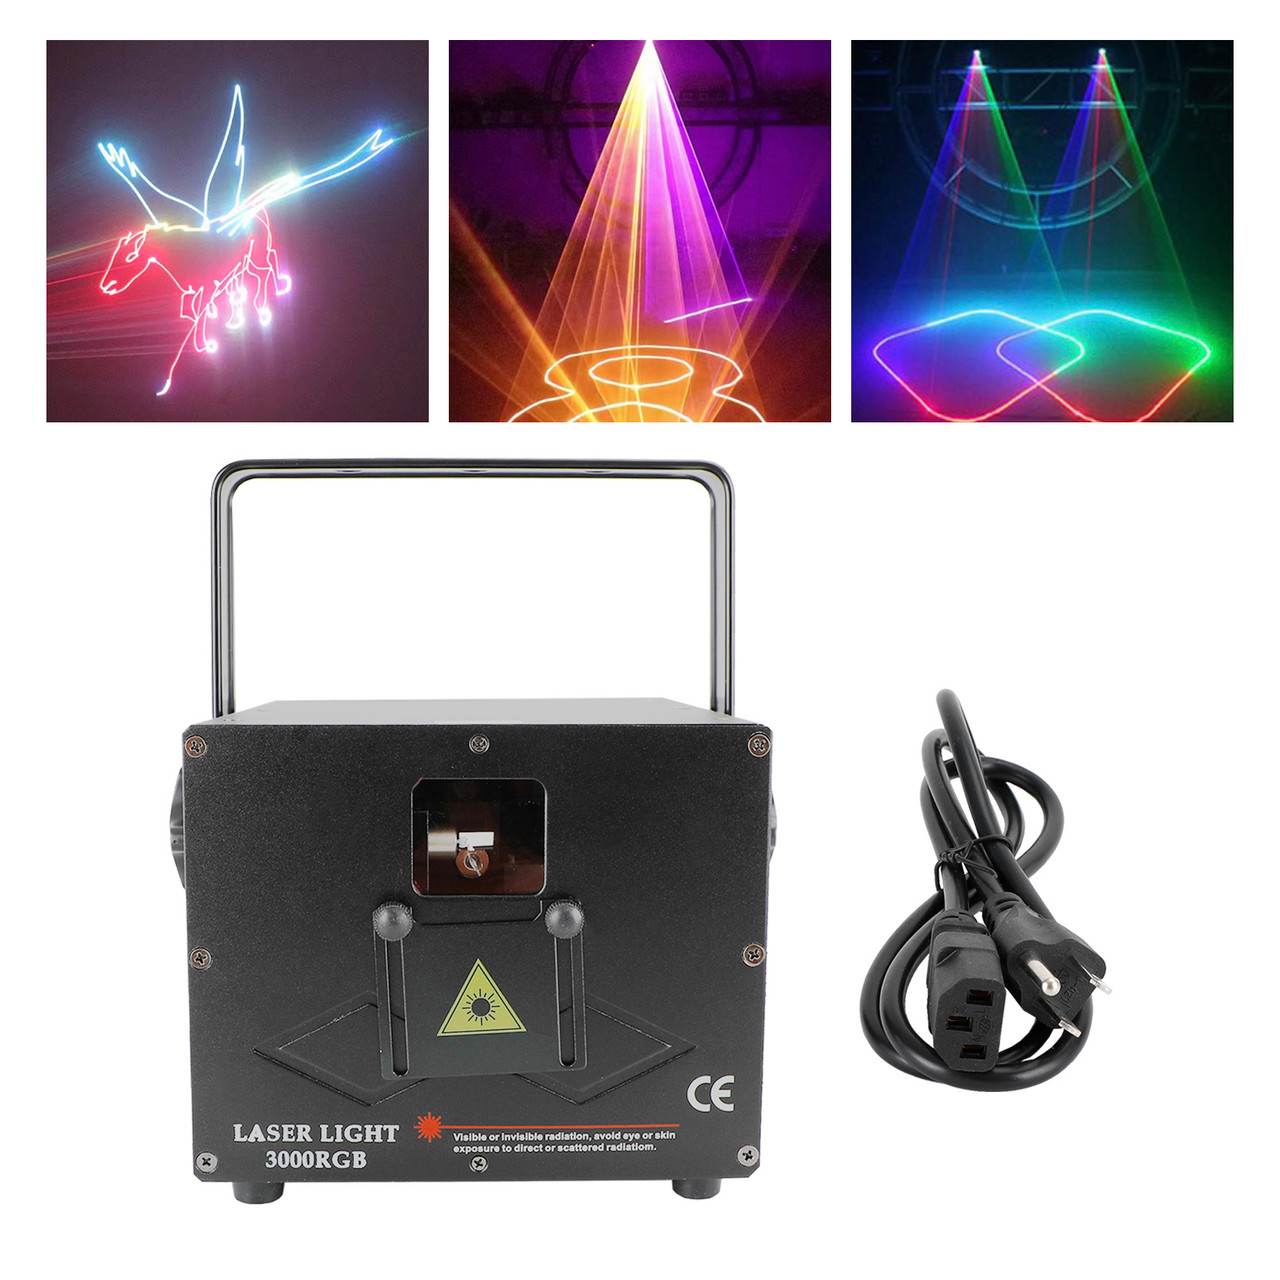 3W Stage Lighting Laser Light RGB Fullcolor Animal Beam Rainbow Effect DMX